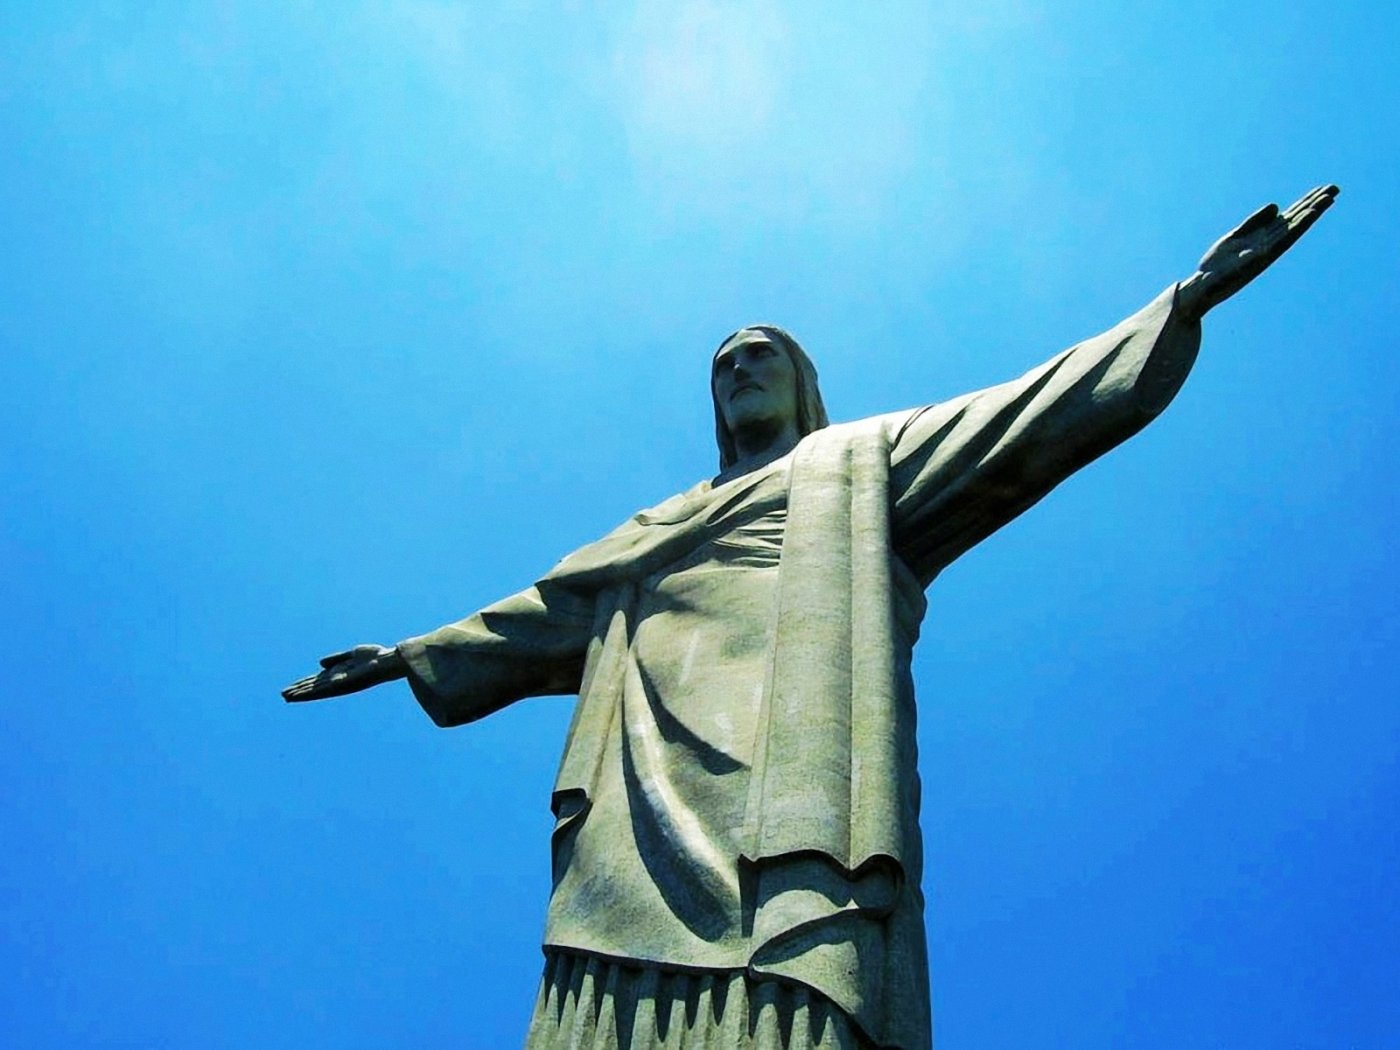 Jesus Statue In Rio Wallpaper De Janeiro